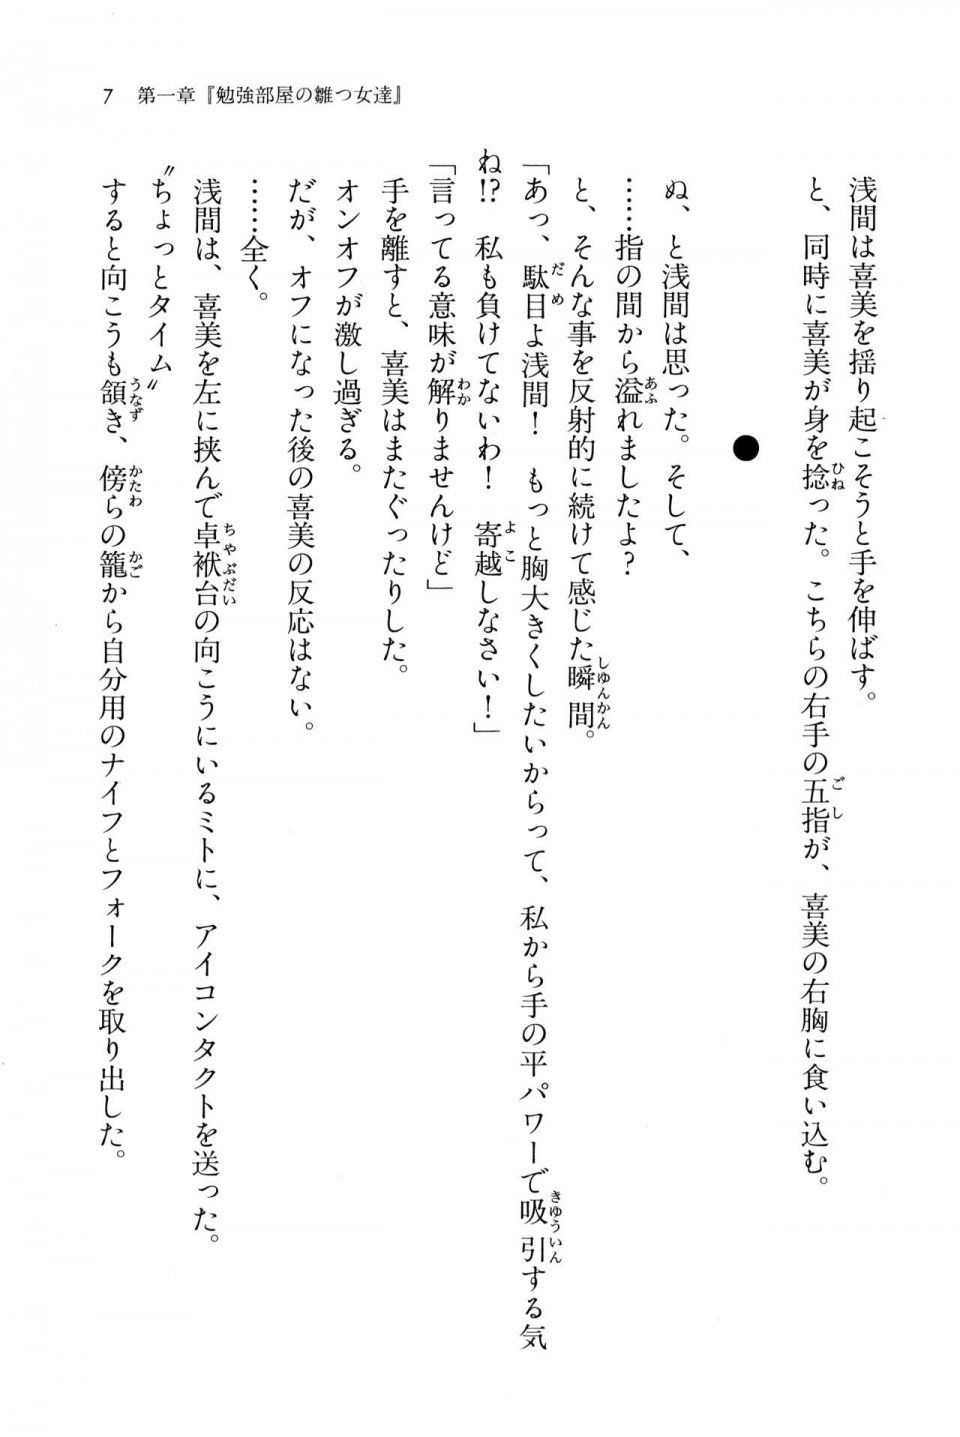 Kyoukai Senjou no Horizon BD Special Mininovel Vol 7(4A) - Photo #11